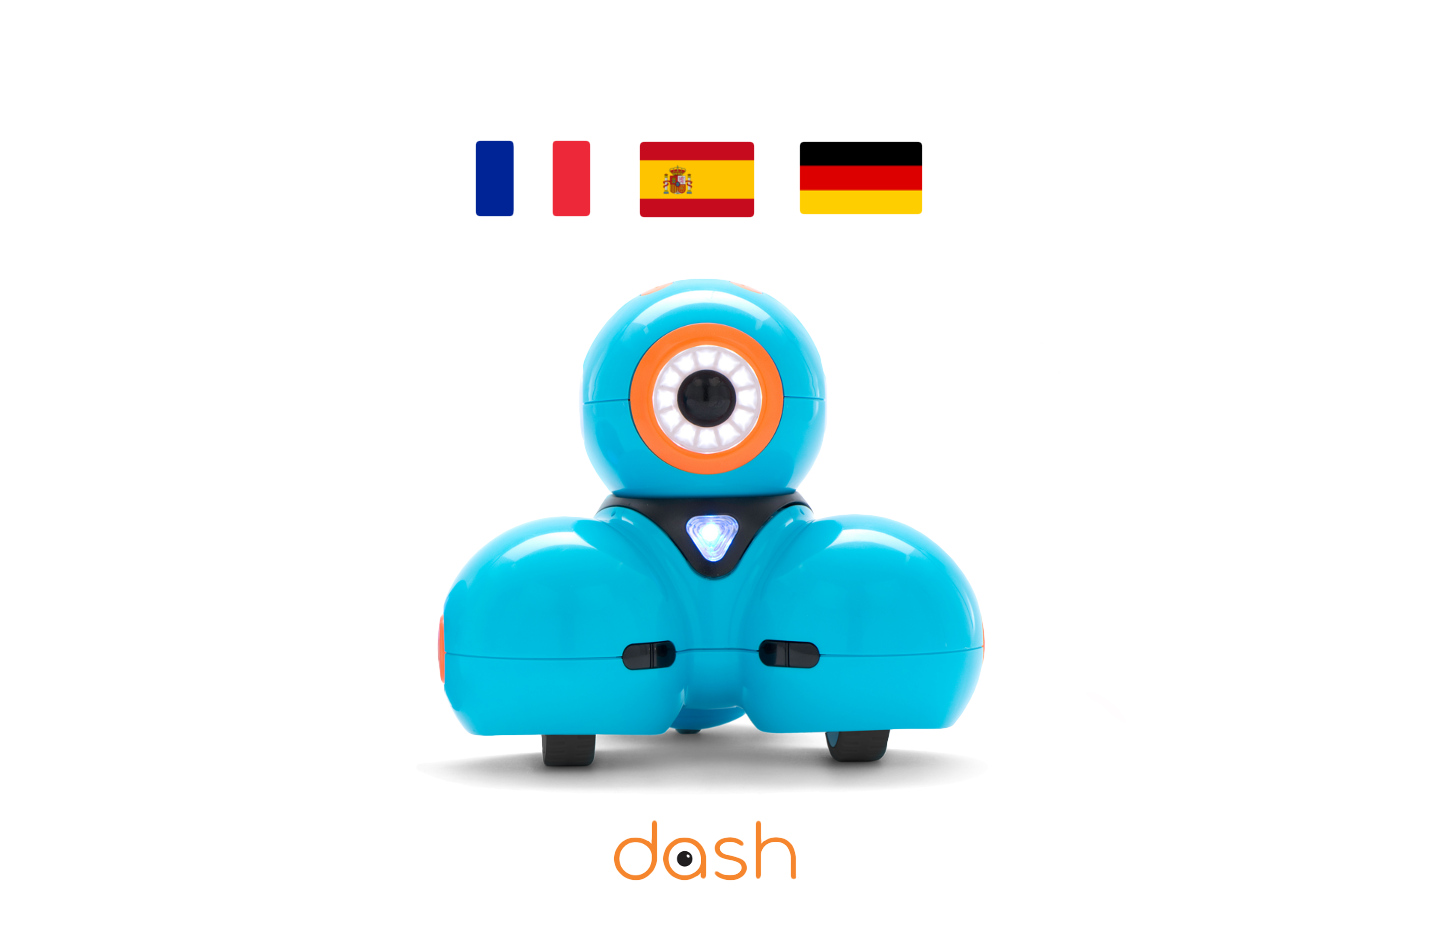 Dot and Dash Robots by Wonder Workshop